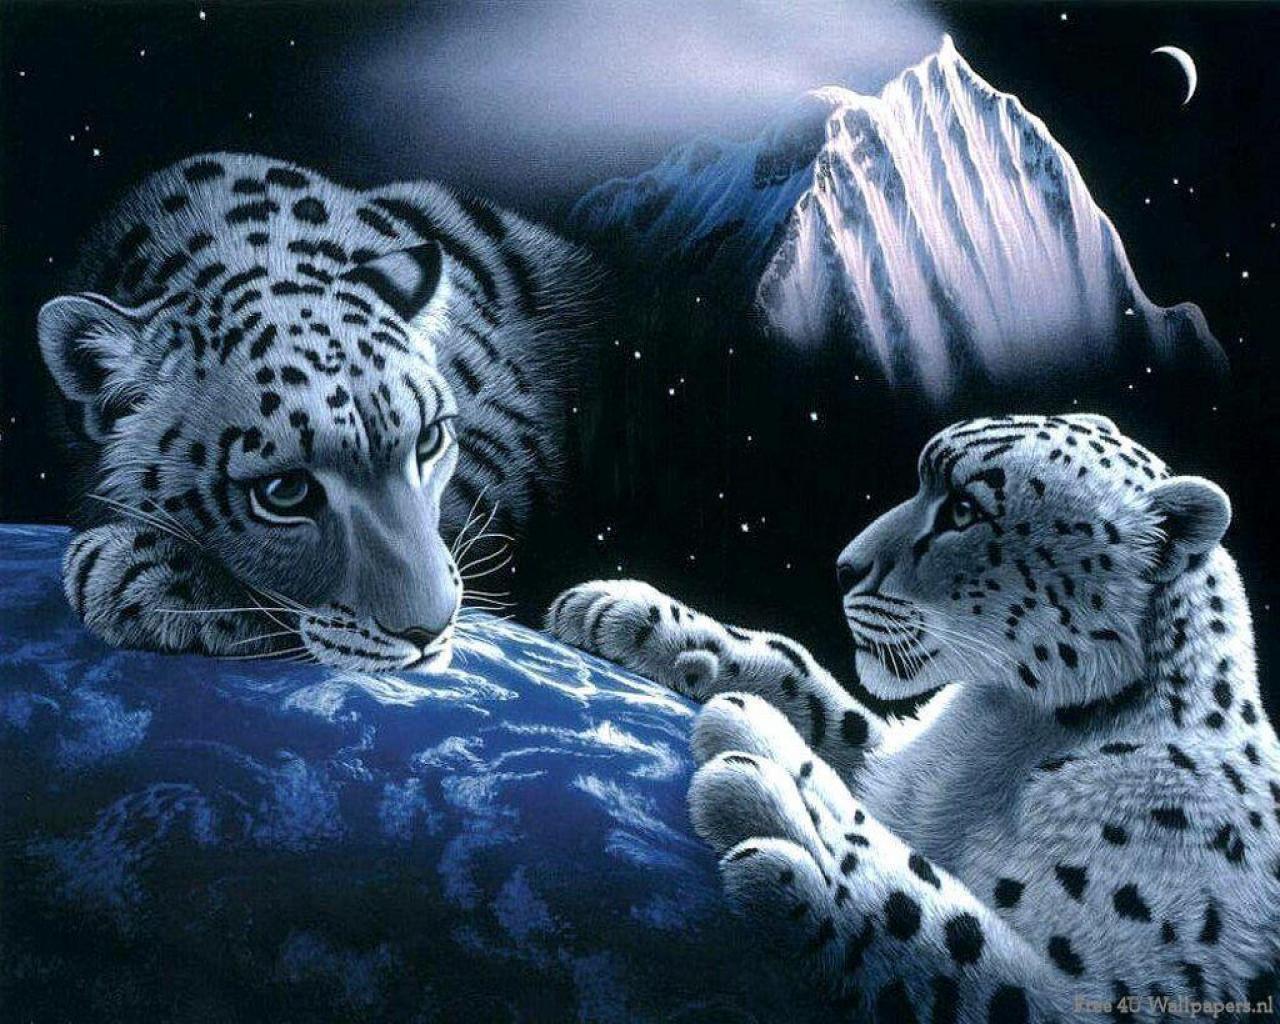 Mesmerizing Big Cats Wallpaper 1280x1024PX Wild Animals